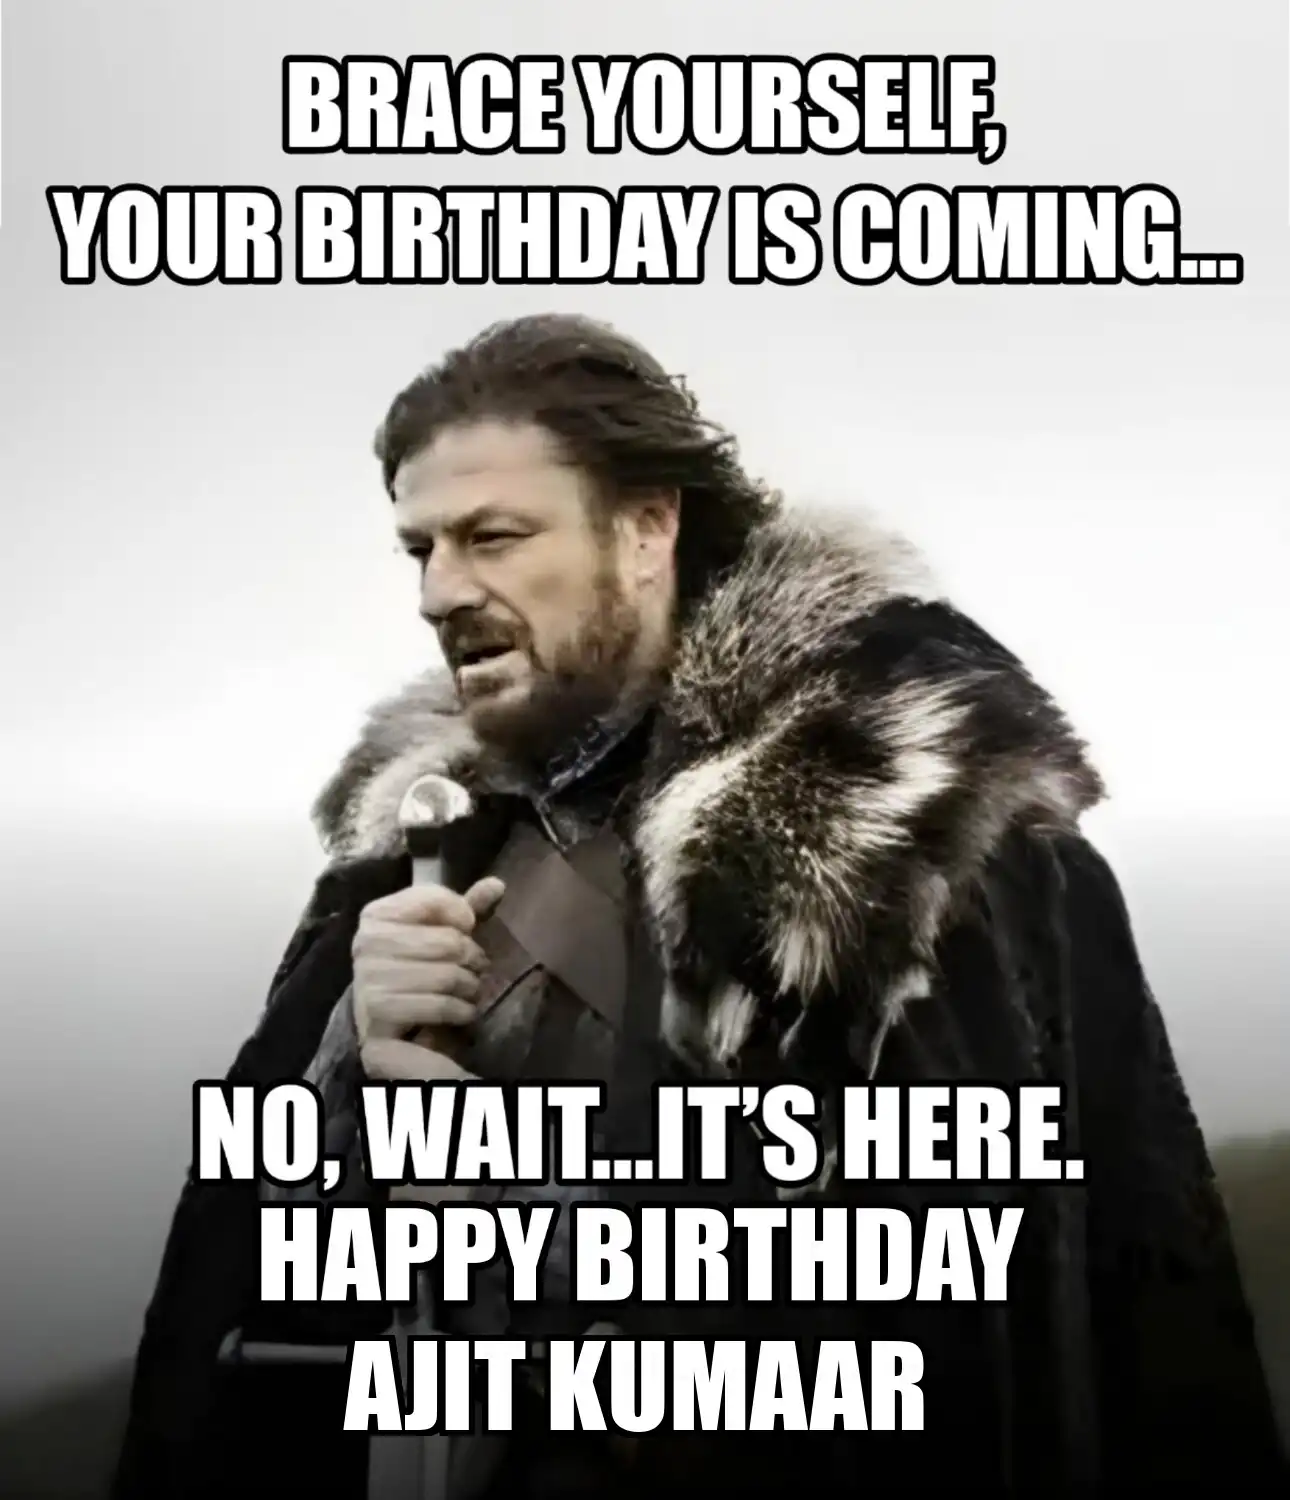 Happy Birthday Ajit Kumaar Brace Yourself Your Birthday Is Coming Meme